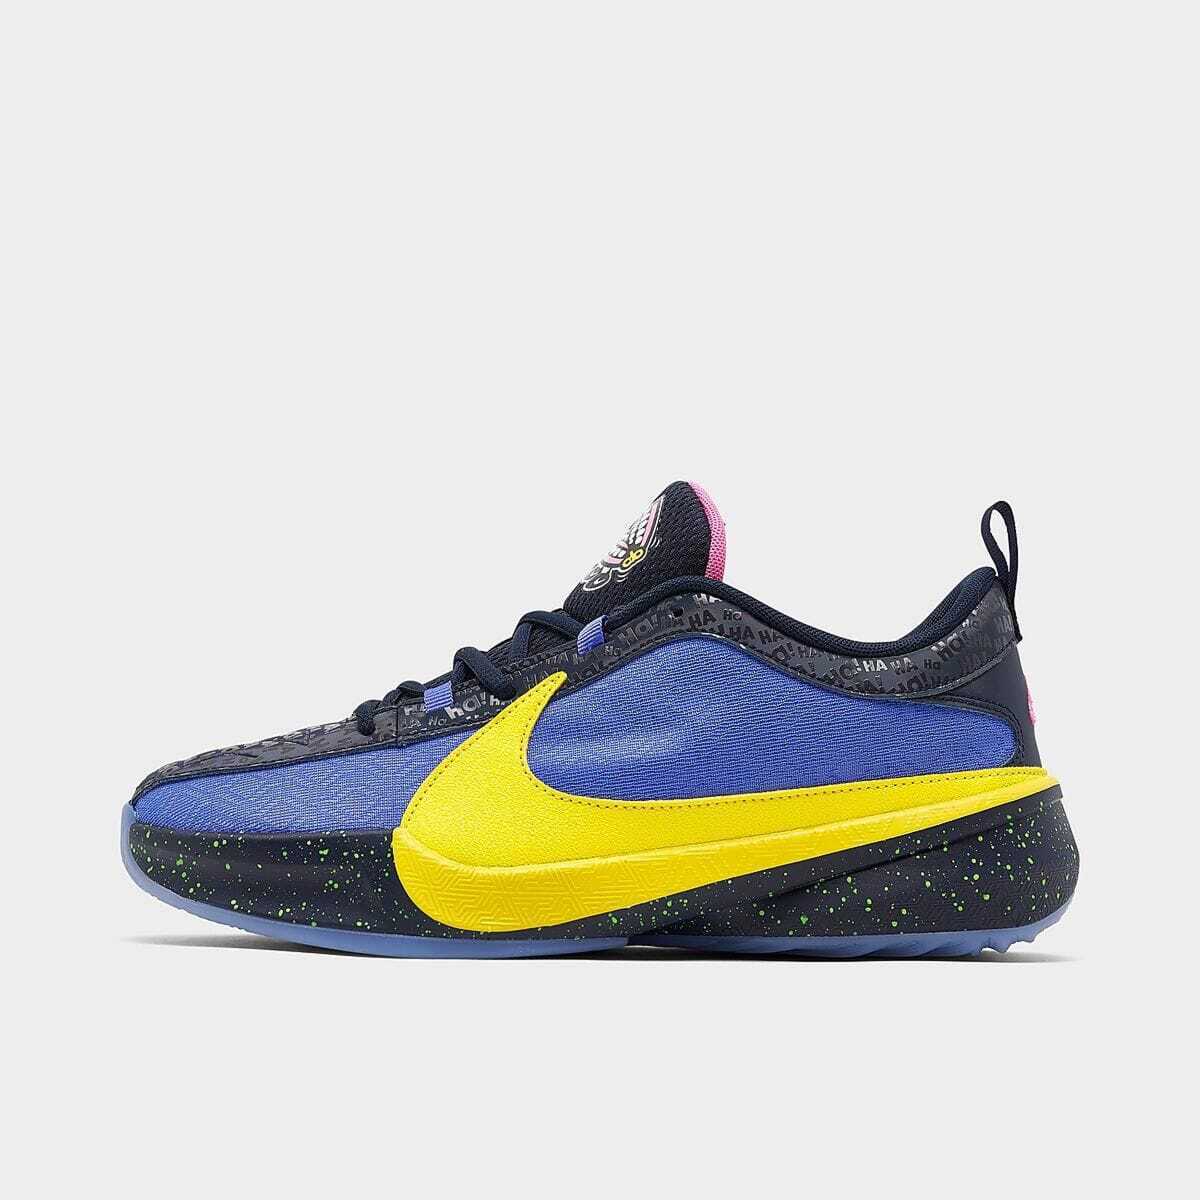 Glamorous GS Nike Freak 5 SE Basketball Shoes Blue Tint/Opti Yellow/Blue Joy FN4399 400 on eBay